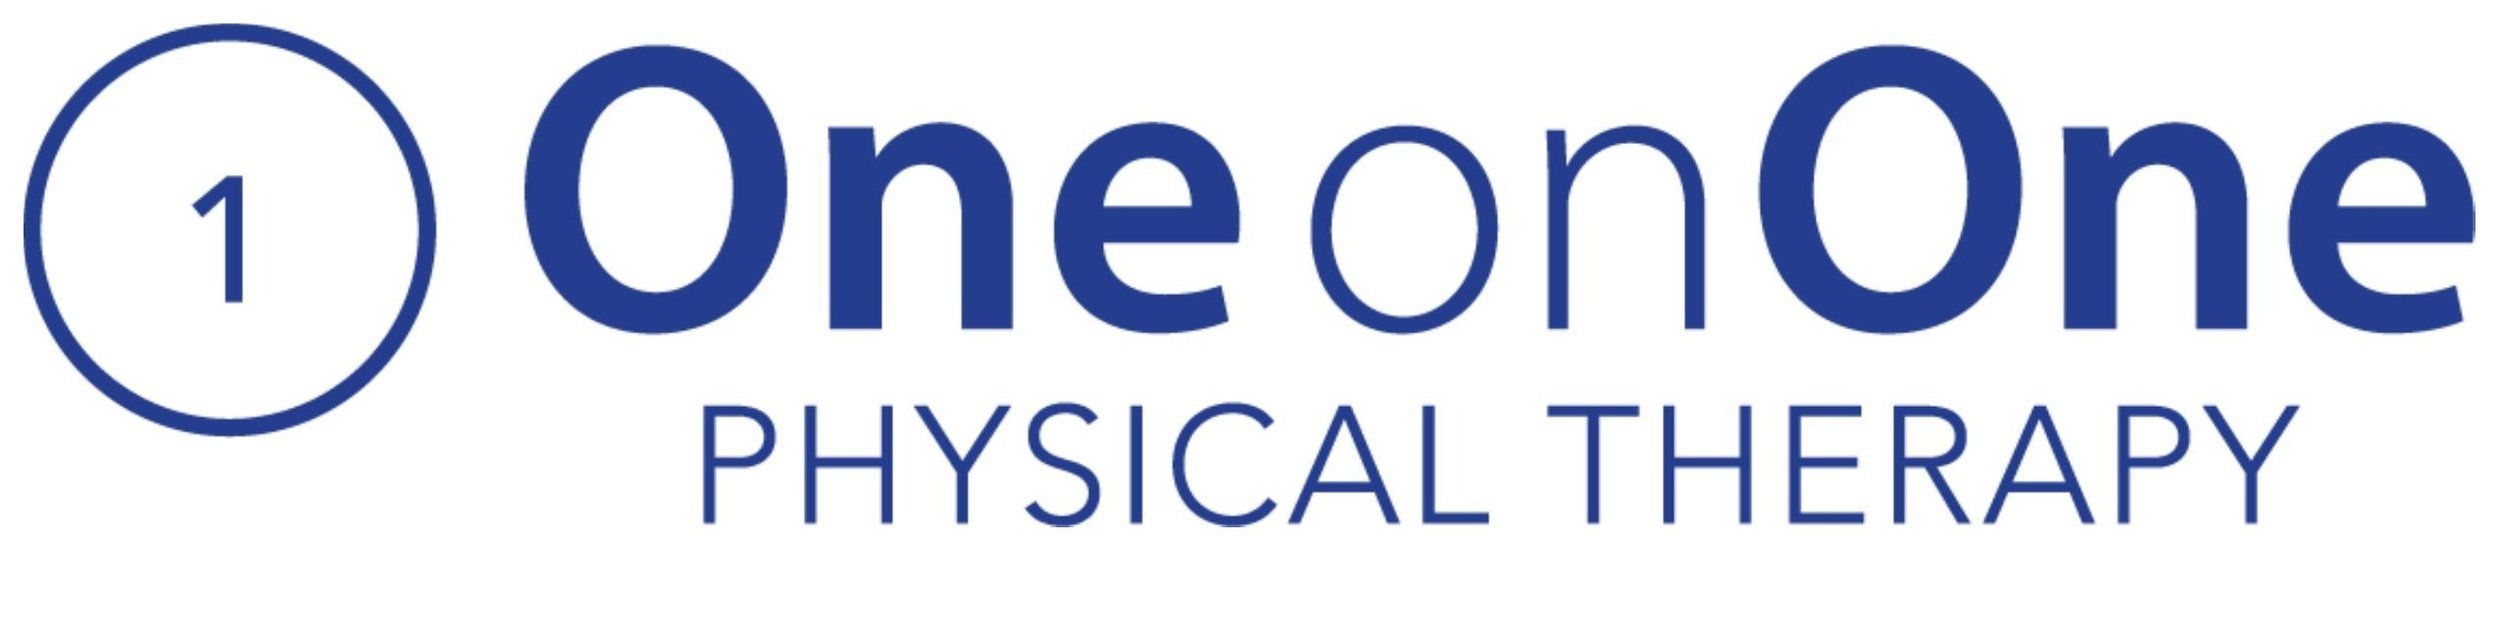 OneonOne+logo.jpg